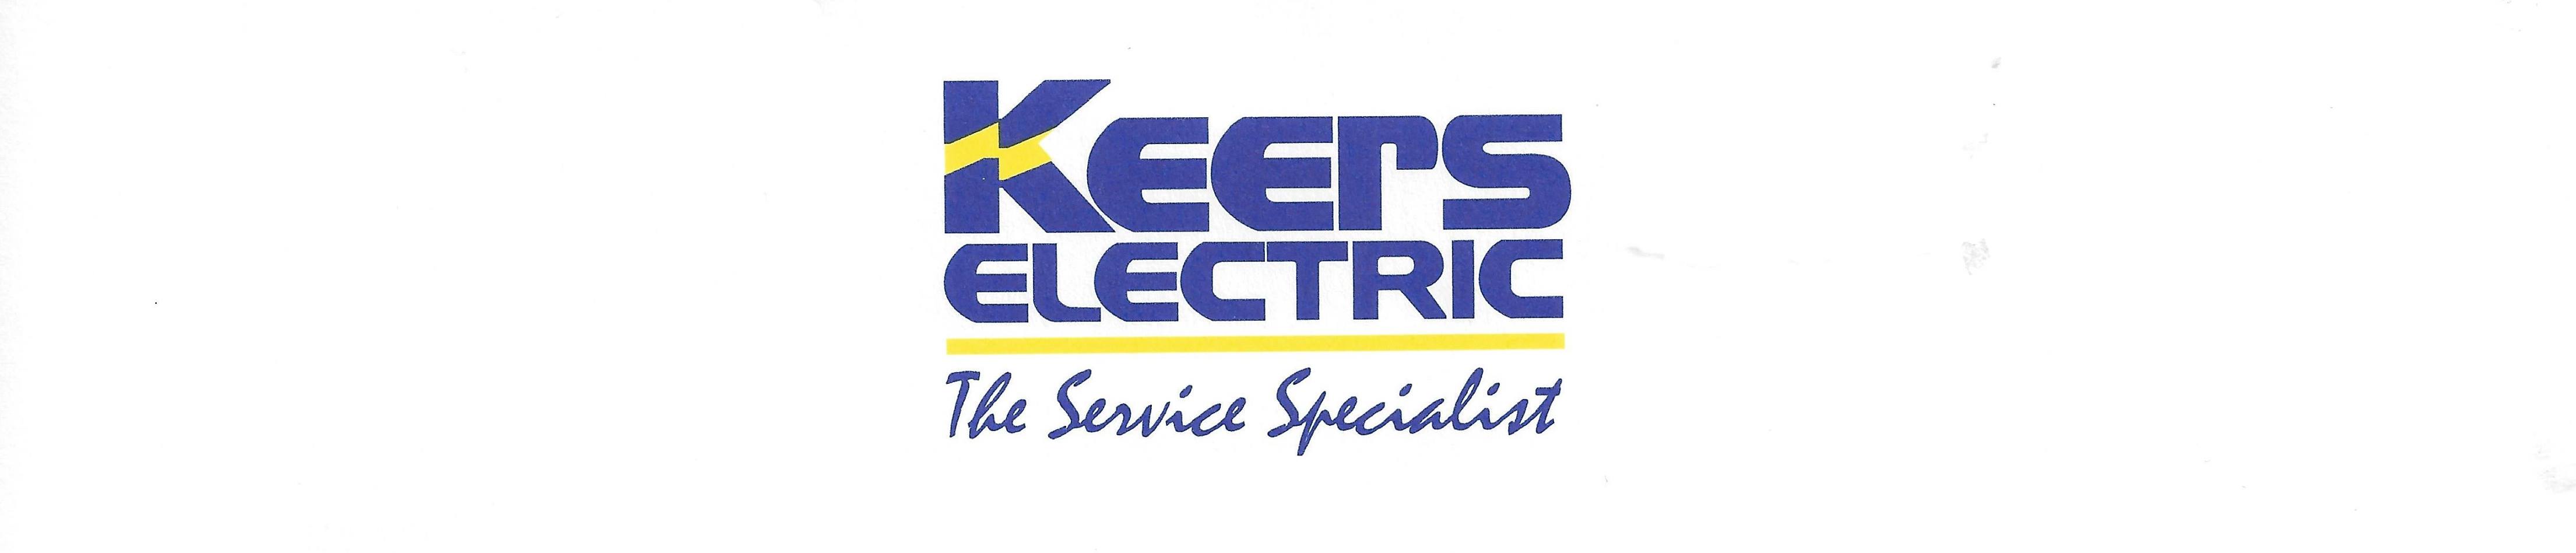 Keers Electric, Inc. 1300 US Hwy 136 N, Pittsboro Indiana 46167